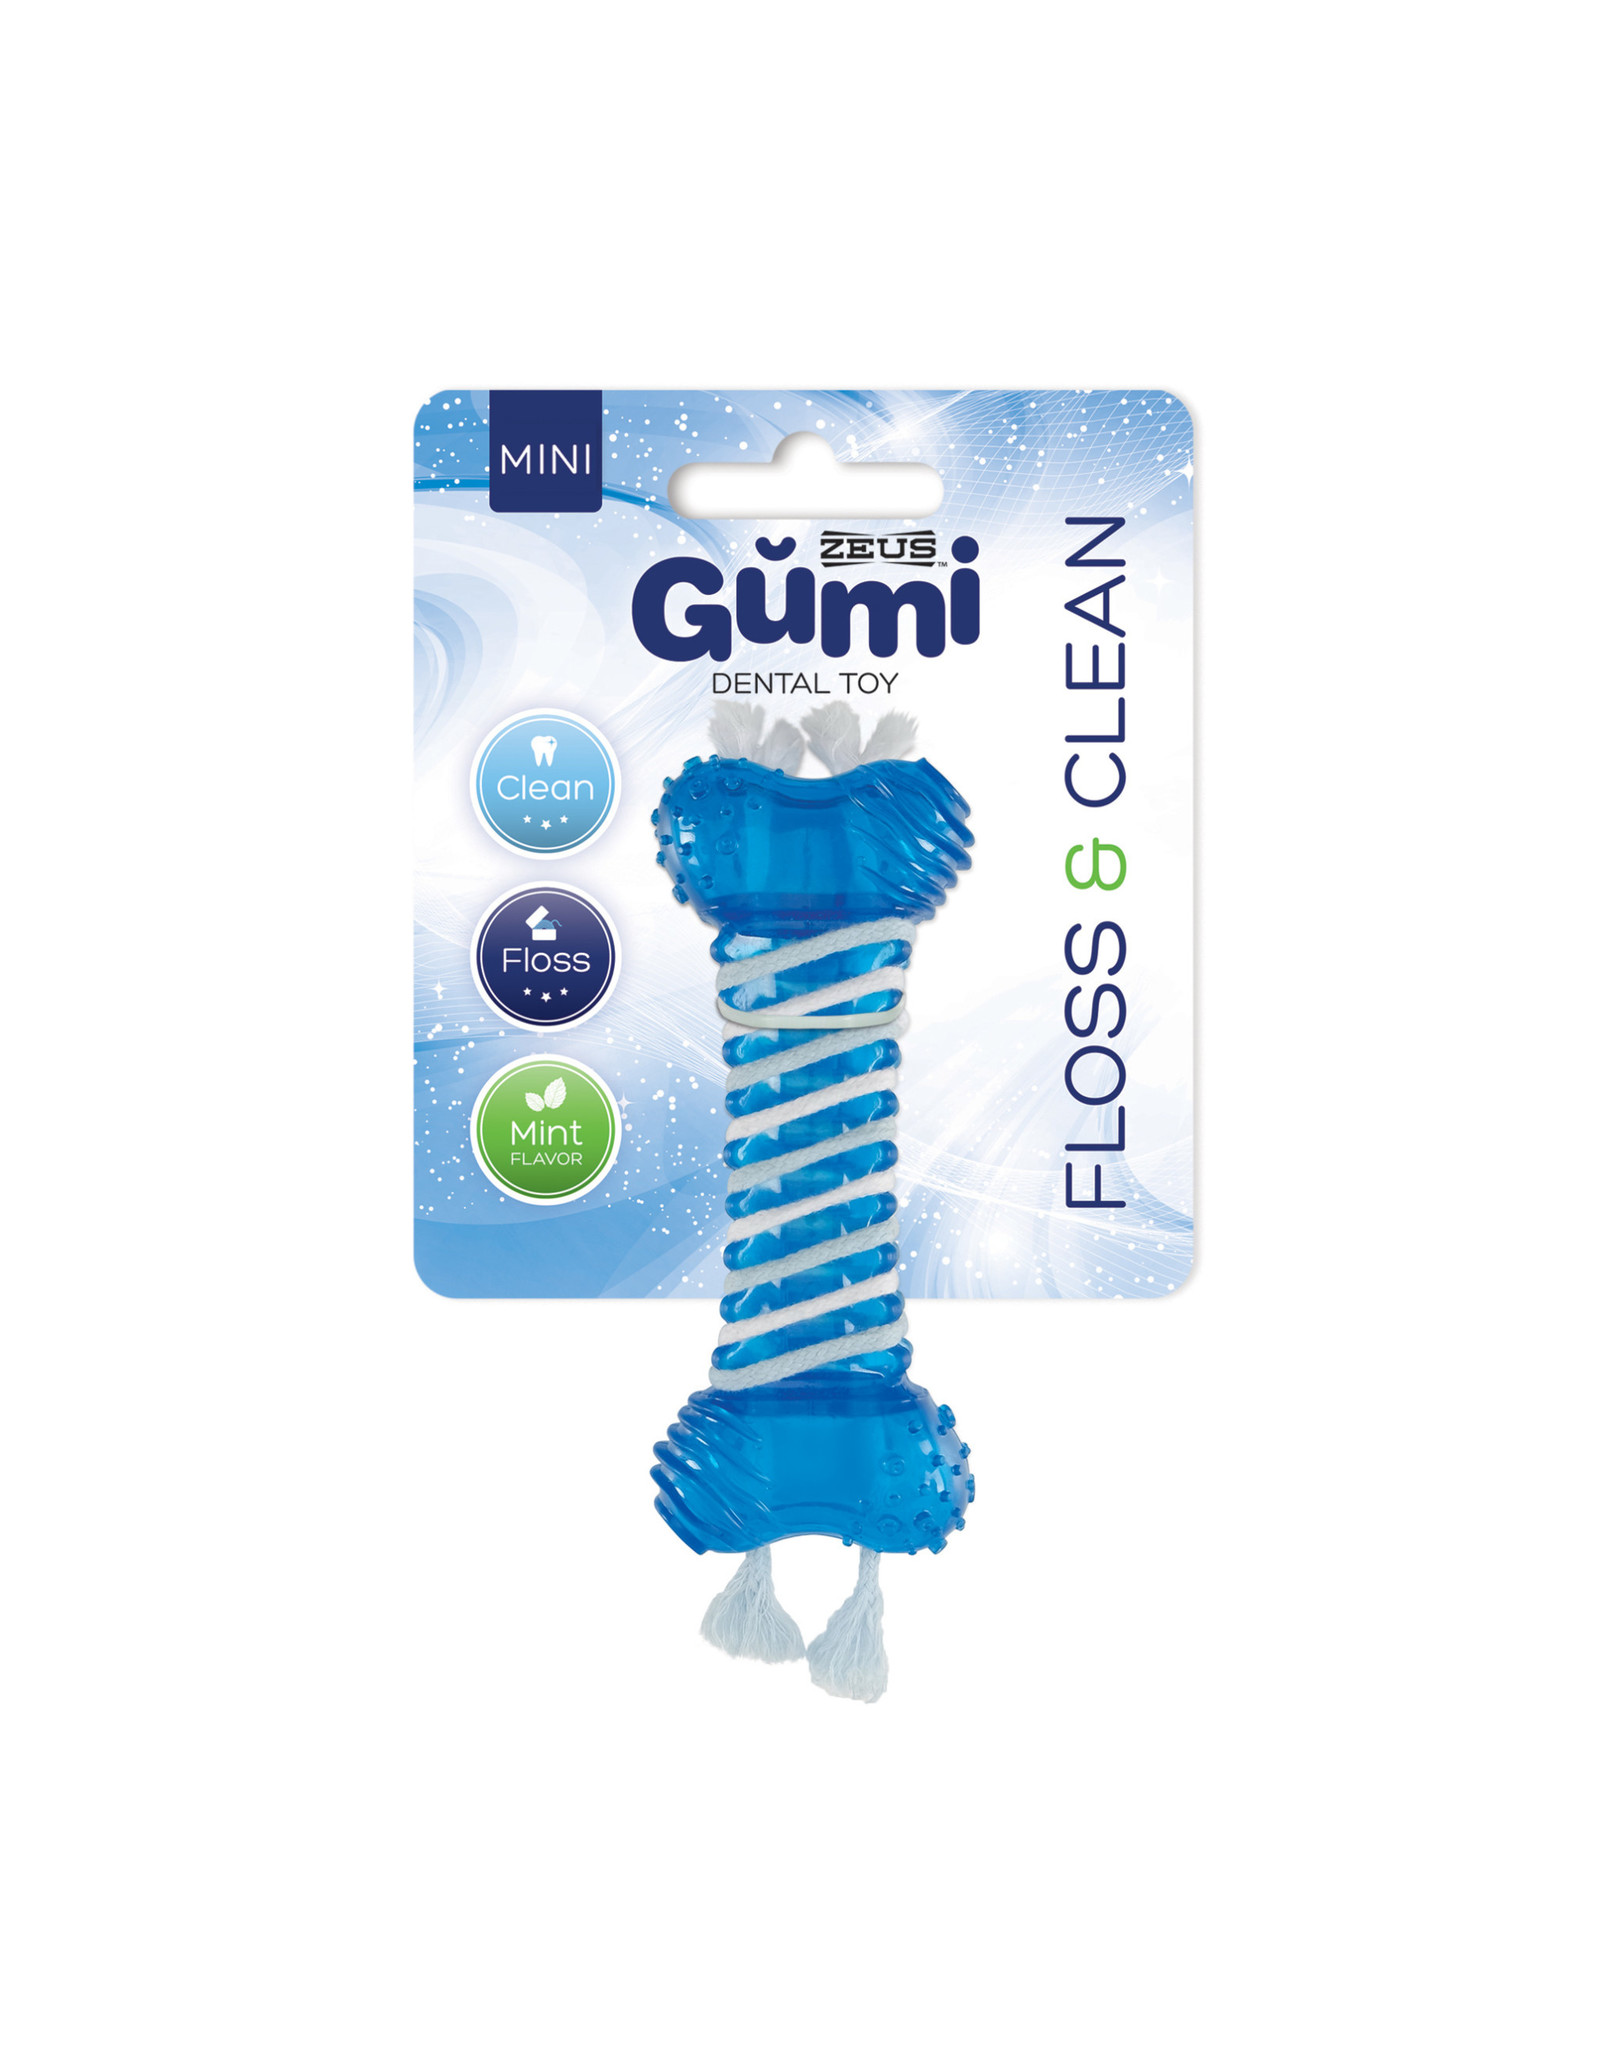 DogIt Gumi Dental Dog Toy Mini Floss & Clean